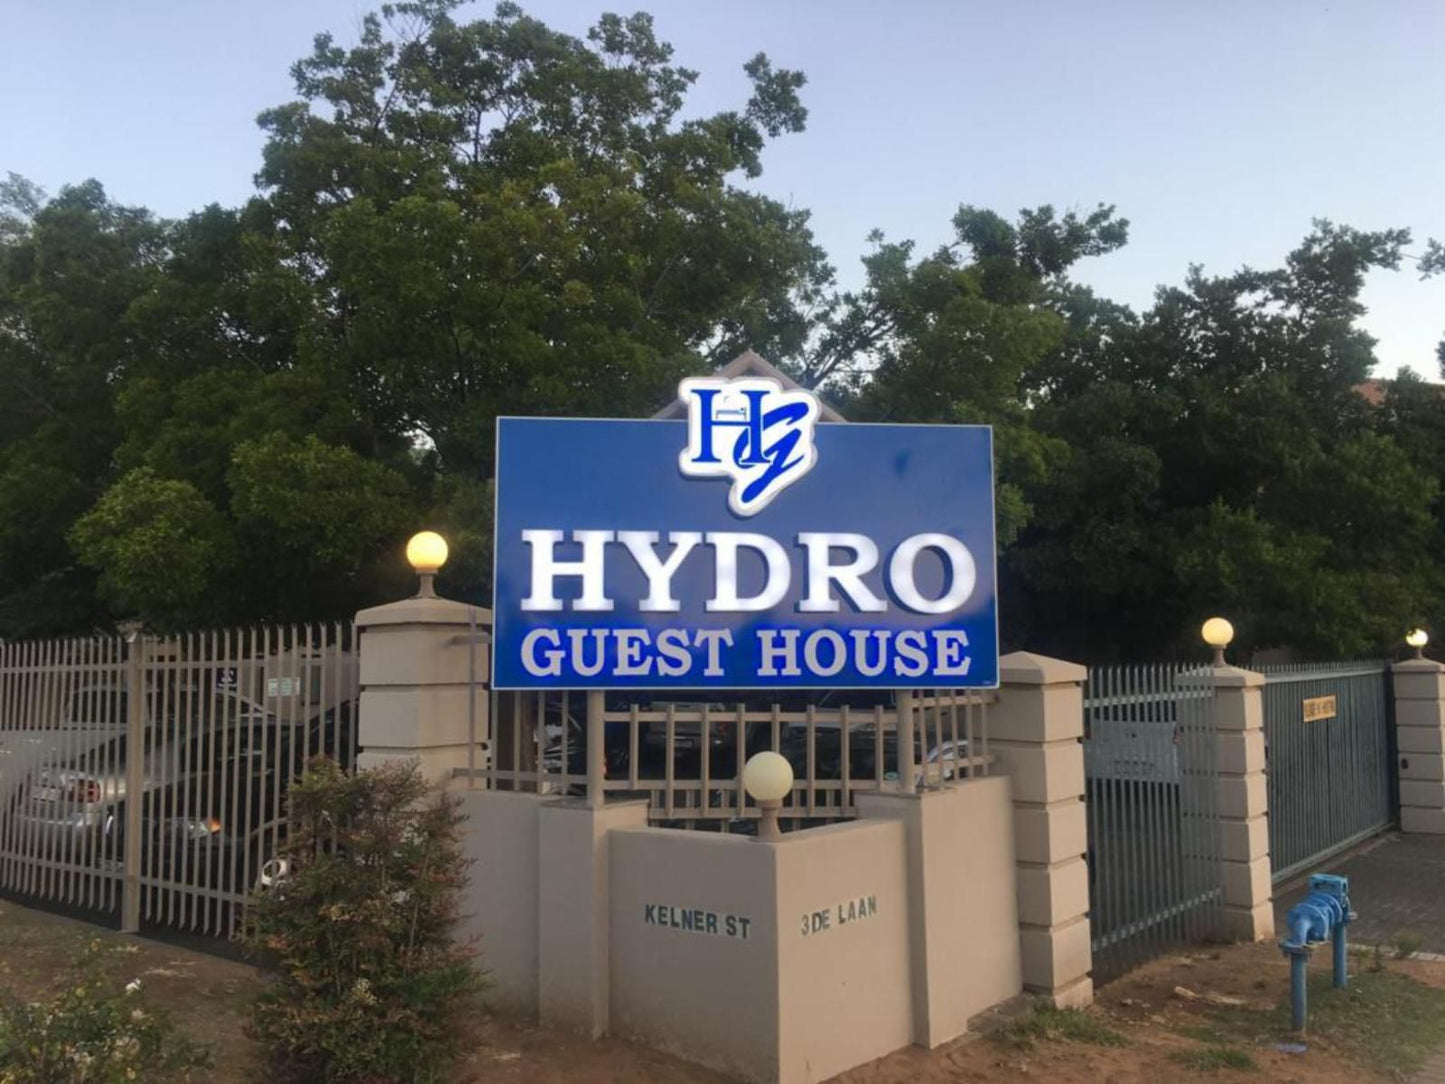 Hydro Guest House Westdene Bloemfontein Bloemfontein Free State South Africa Sign